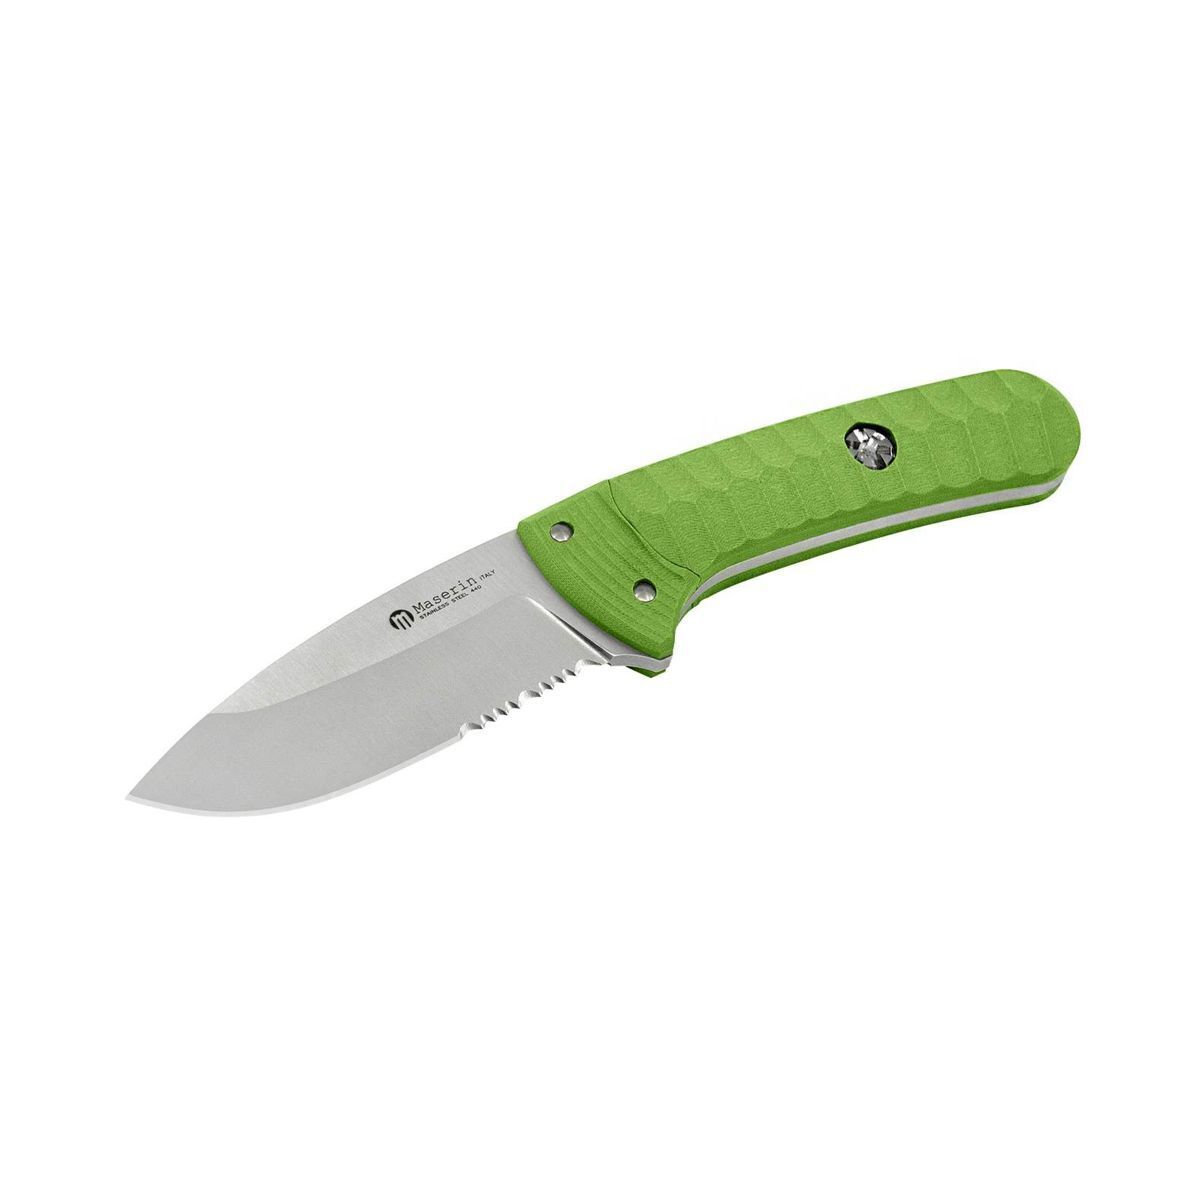 Maserin 975/G10V 85mm Sax Bush Craft Knife (Green Handle)